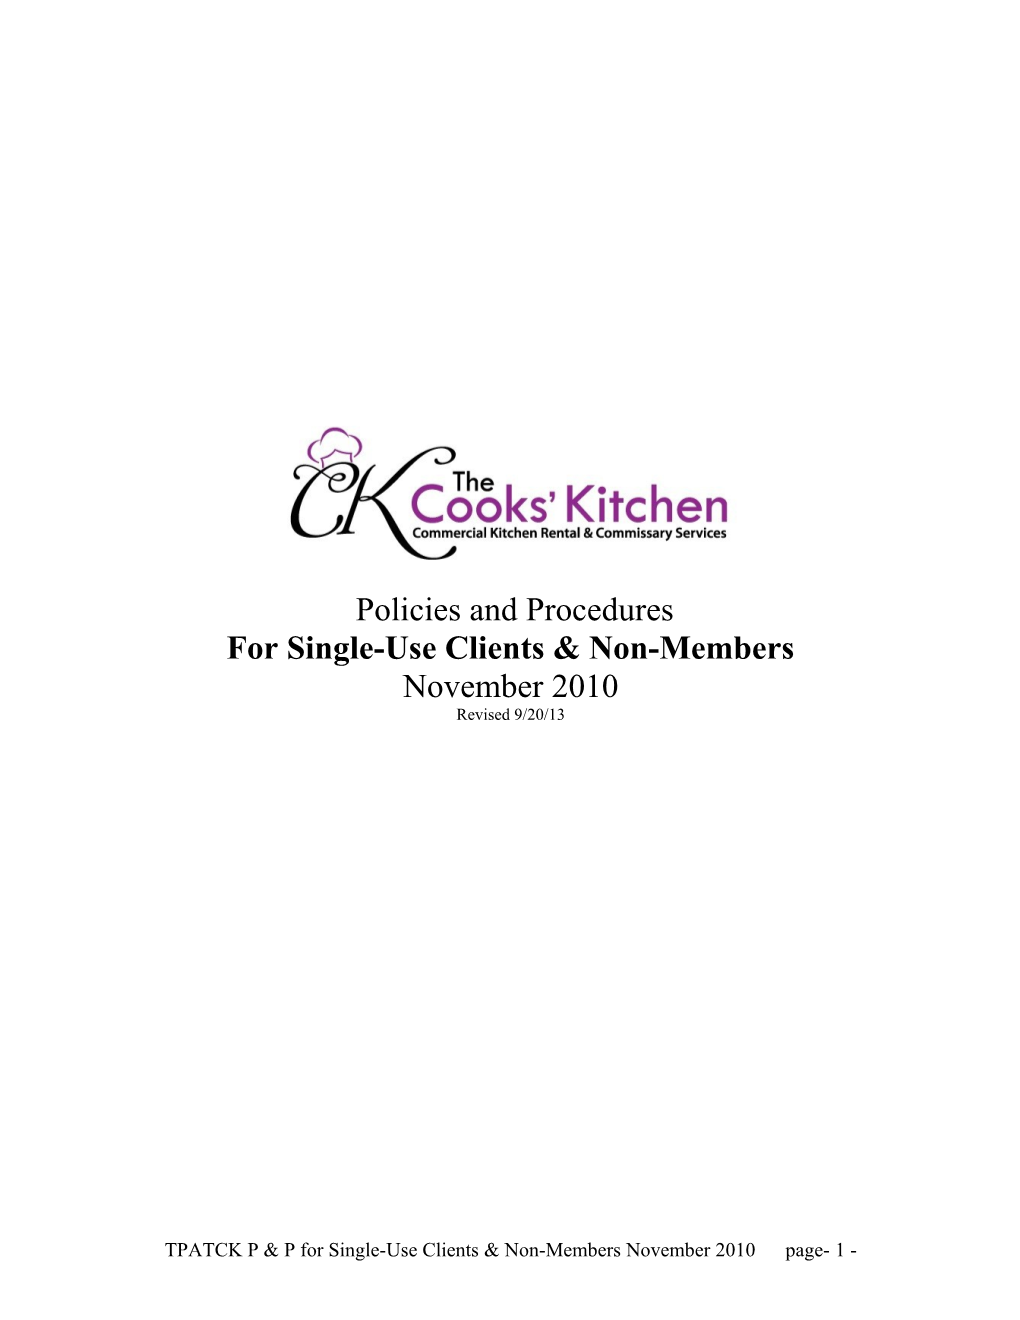 The Platform at the Cooks Kitchen Policy Handbook